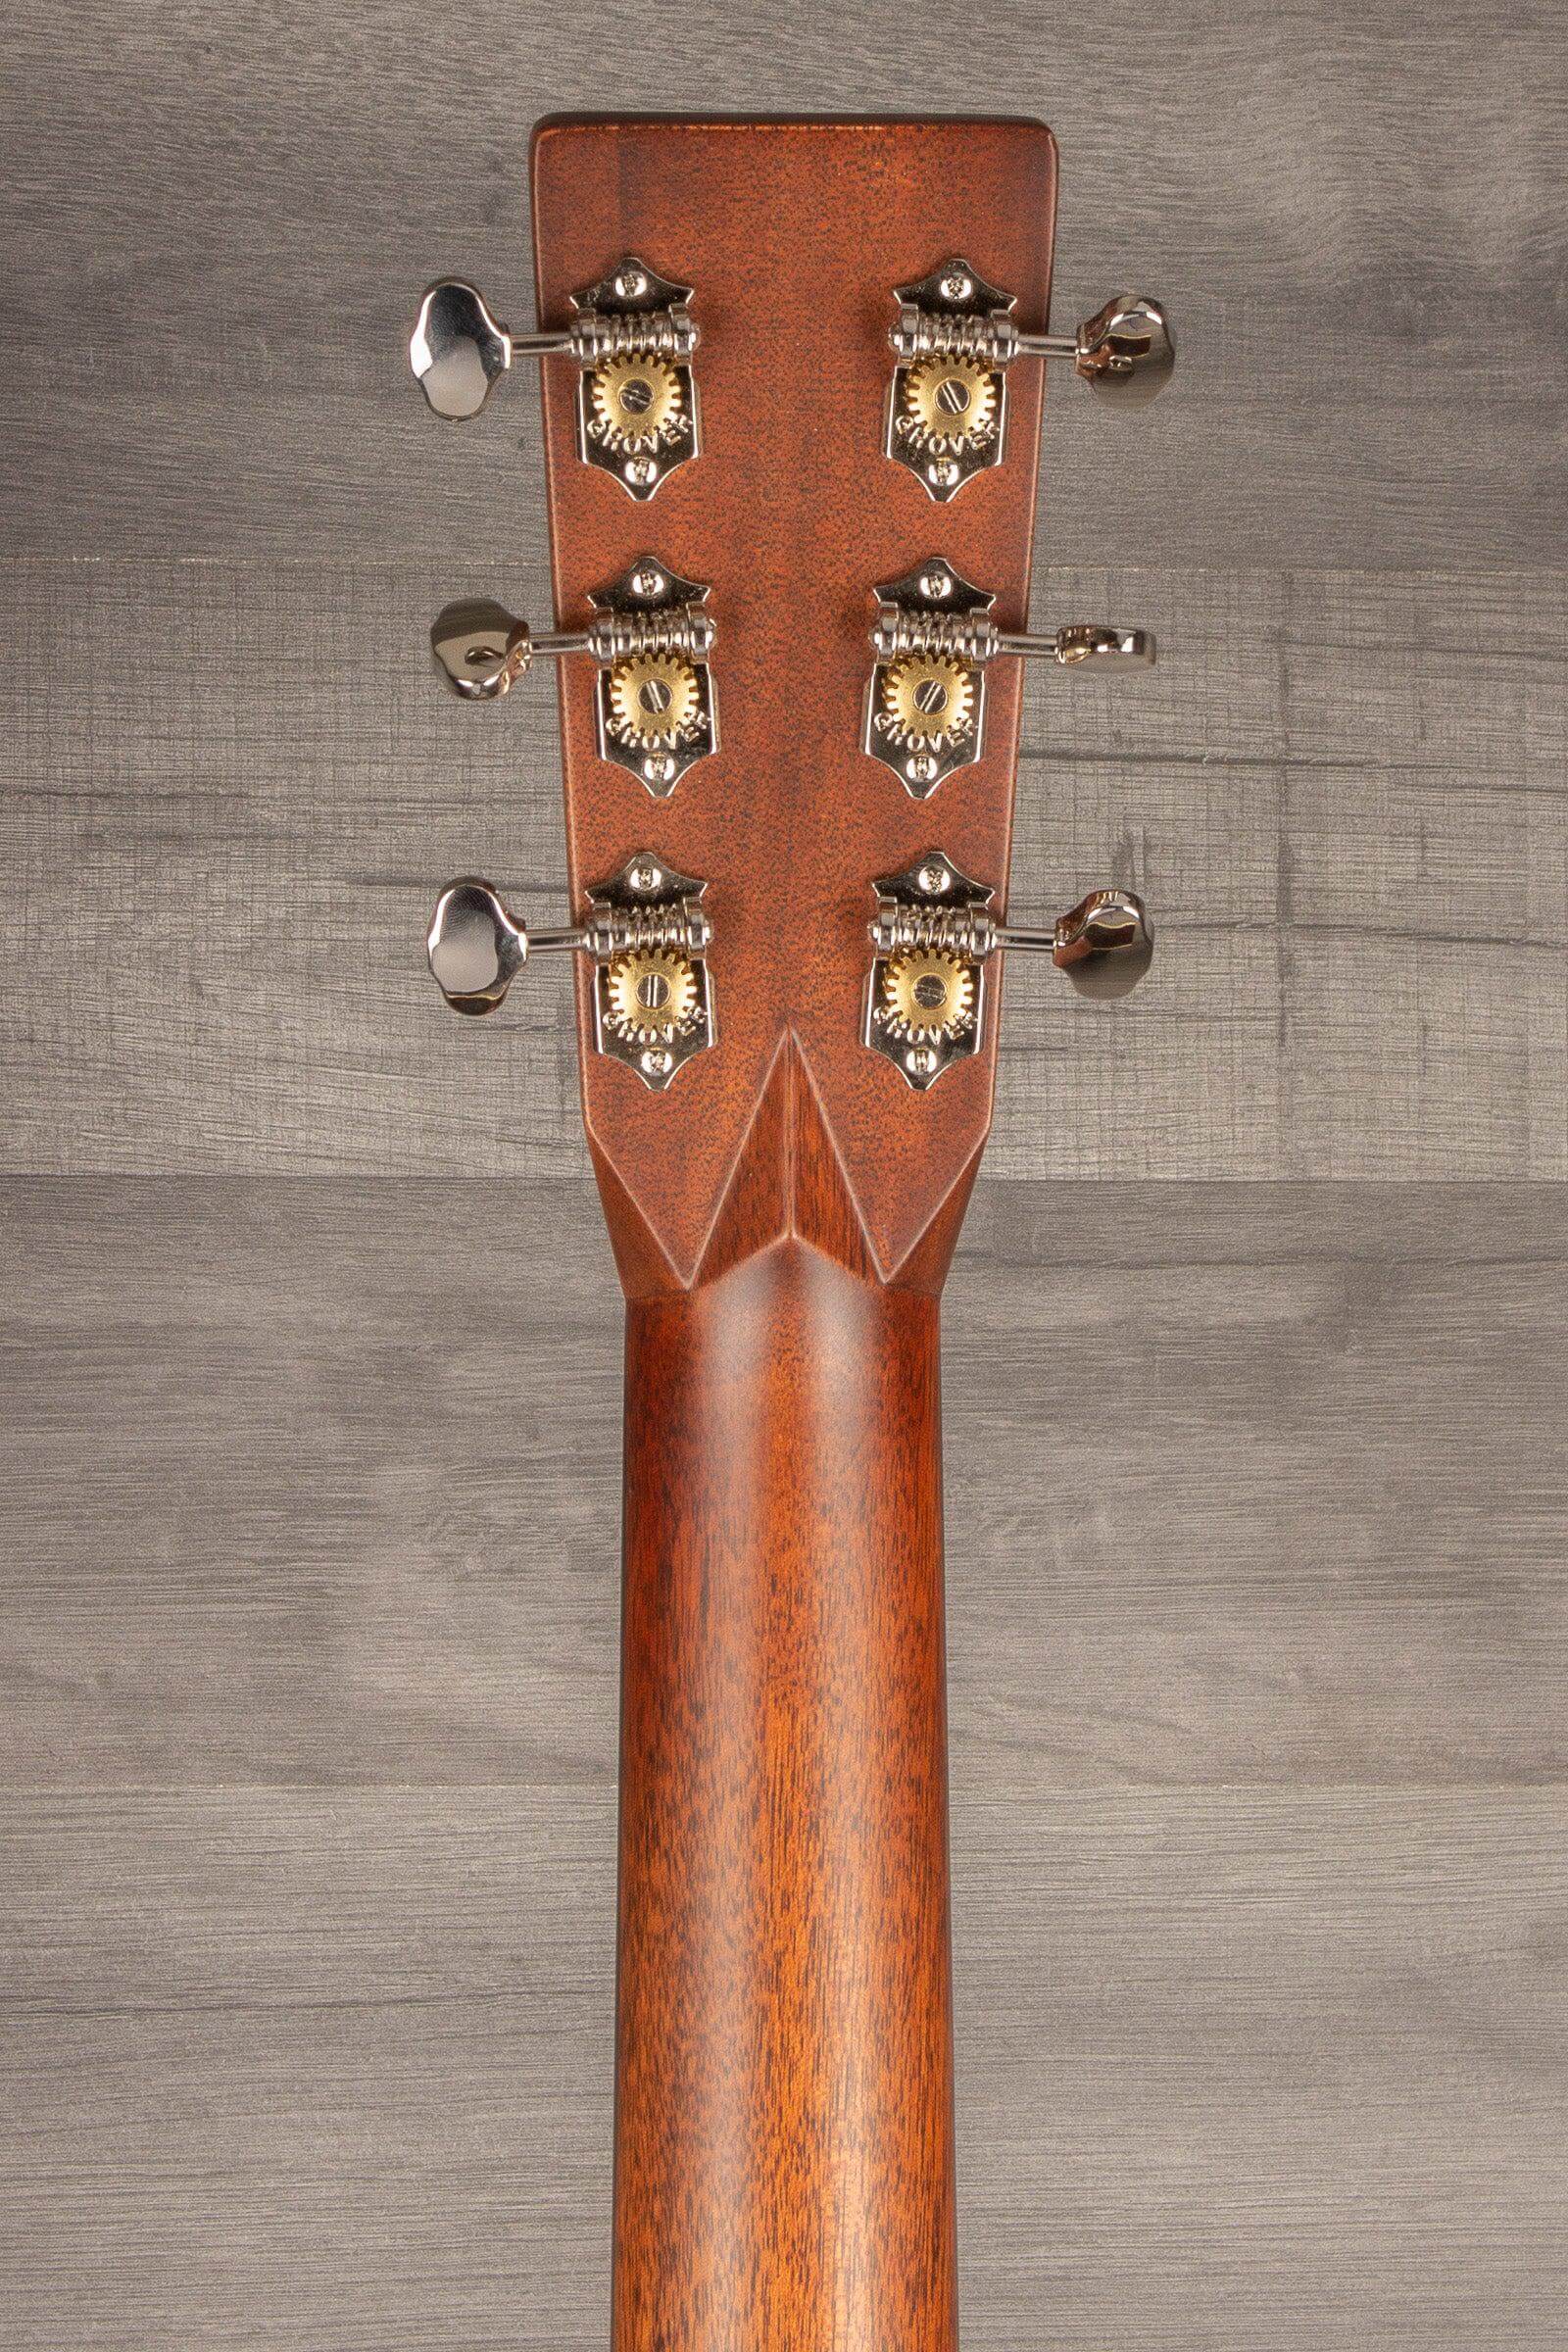 Martin HD-28 Reimagined Ambertone Acoustic guitar - Musicstreet